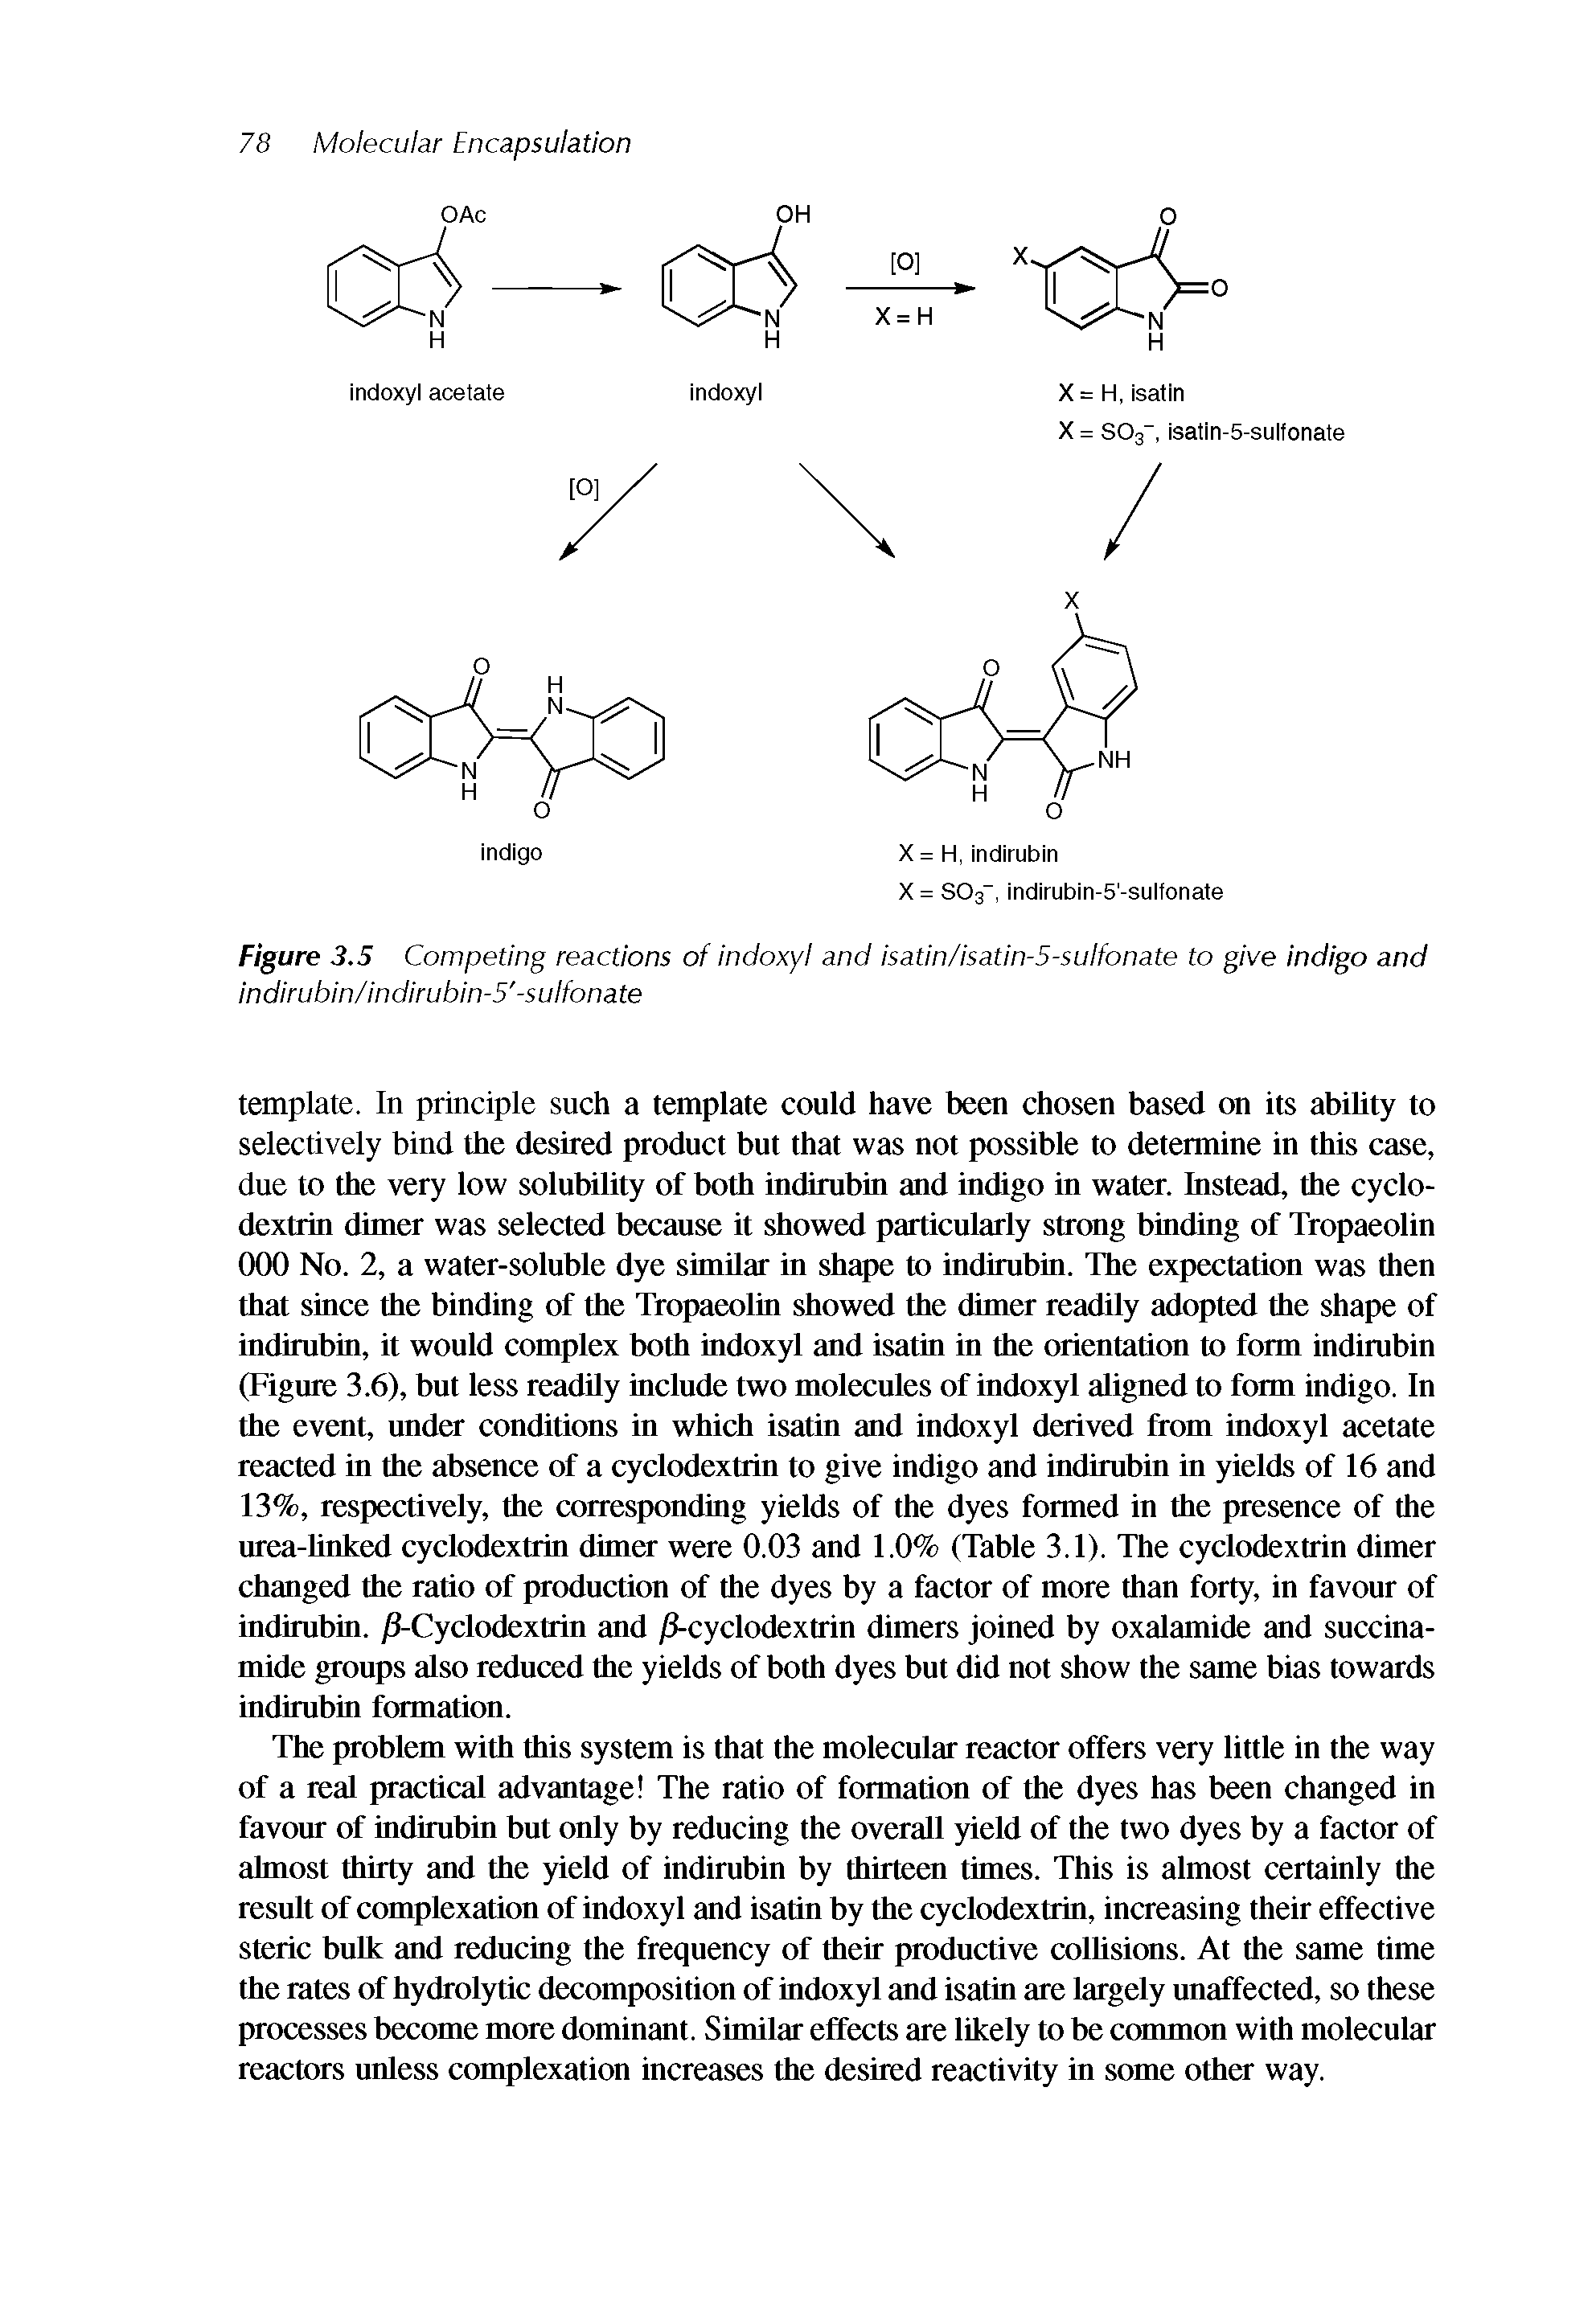 Figure 3.5 Competing reactions of indoxyl and isatin/isatin-5-sulfonate to give indigo and indirubin/indirubin-5 -sulfonate...